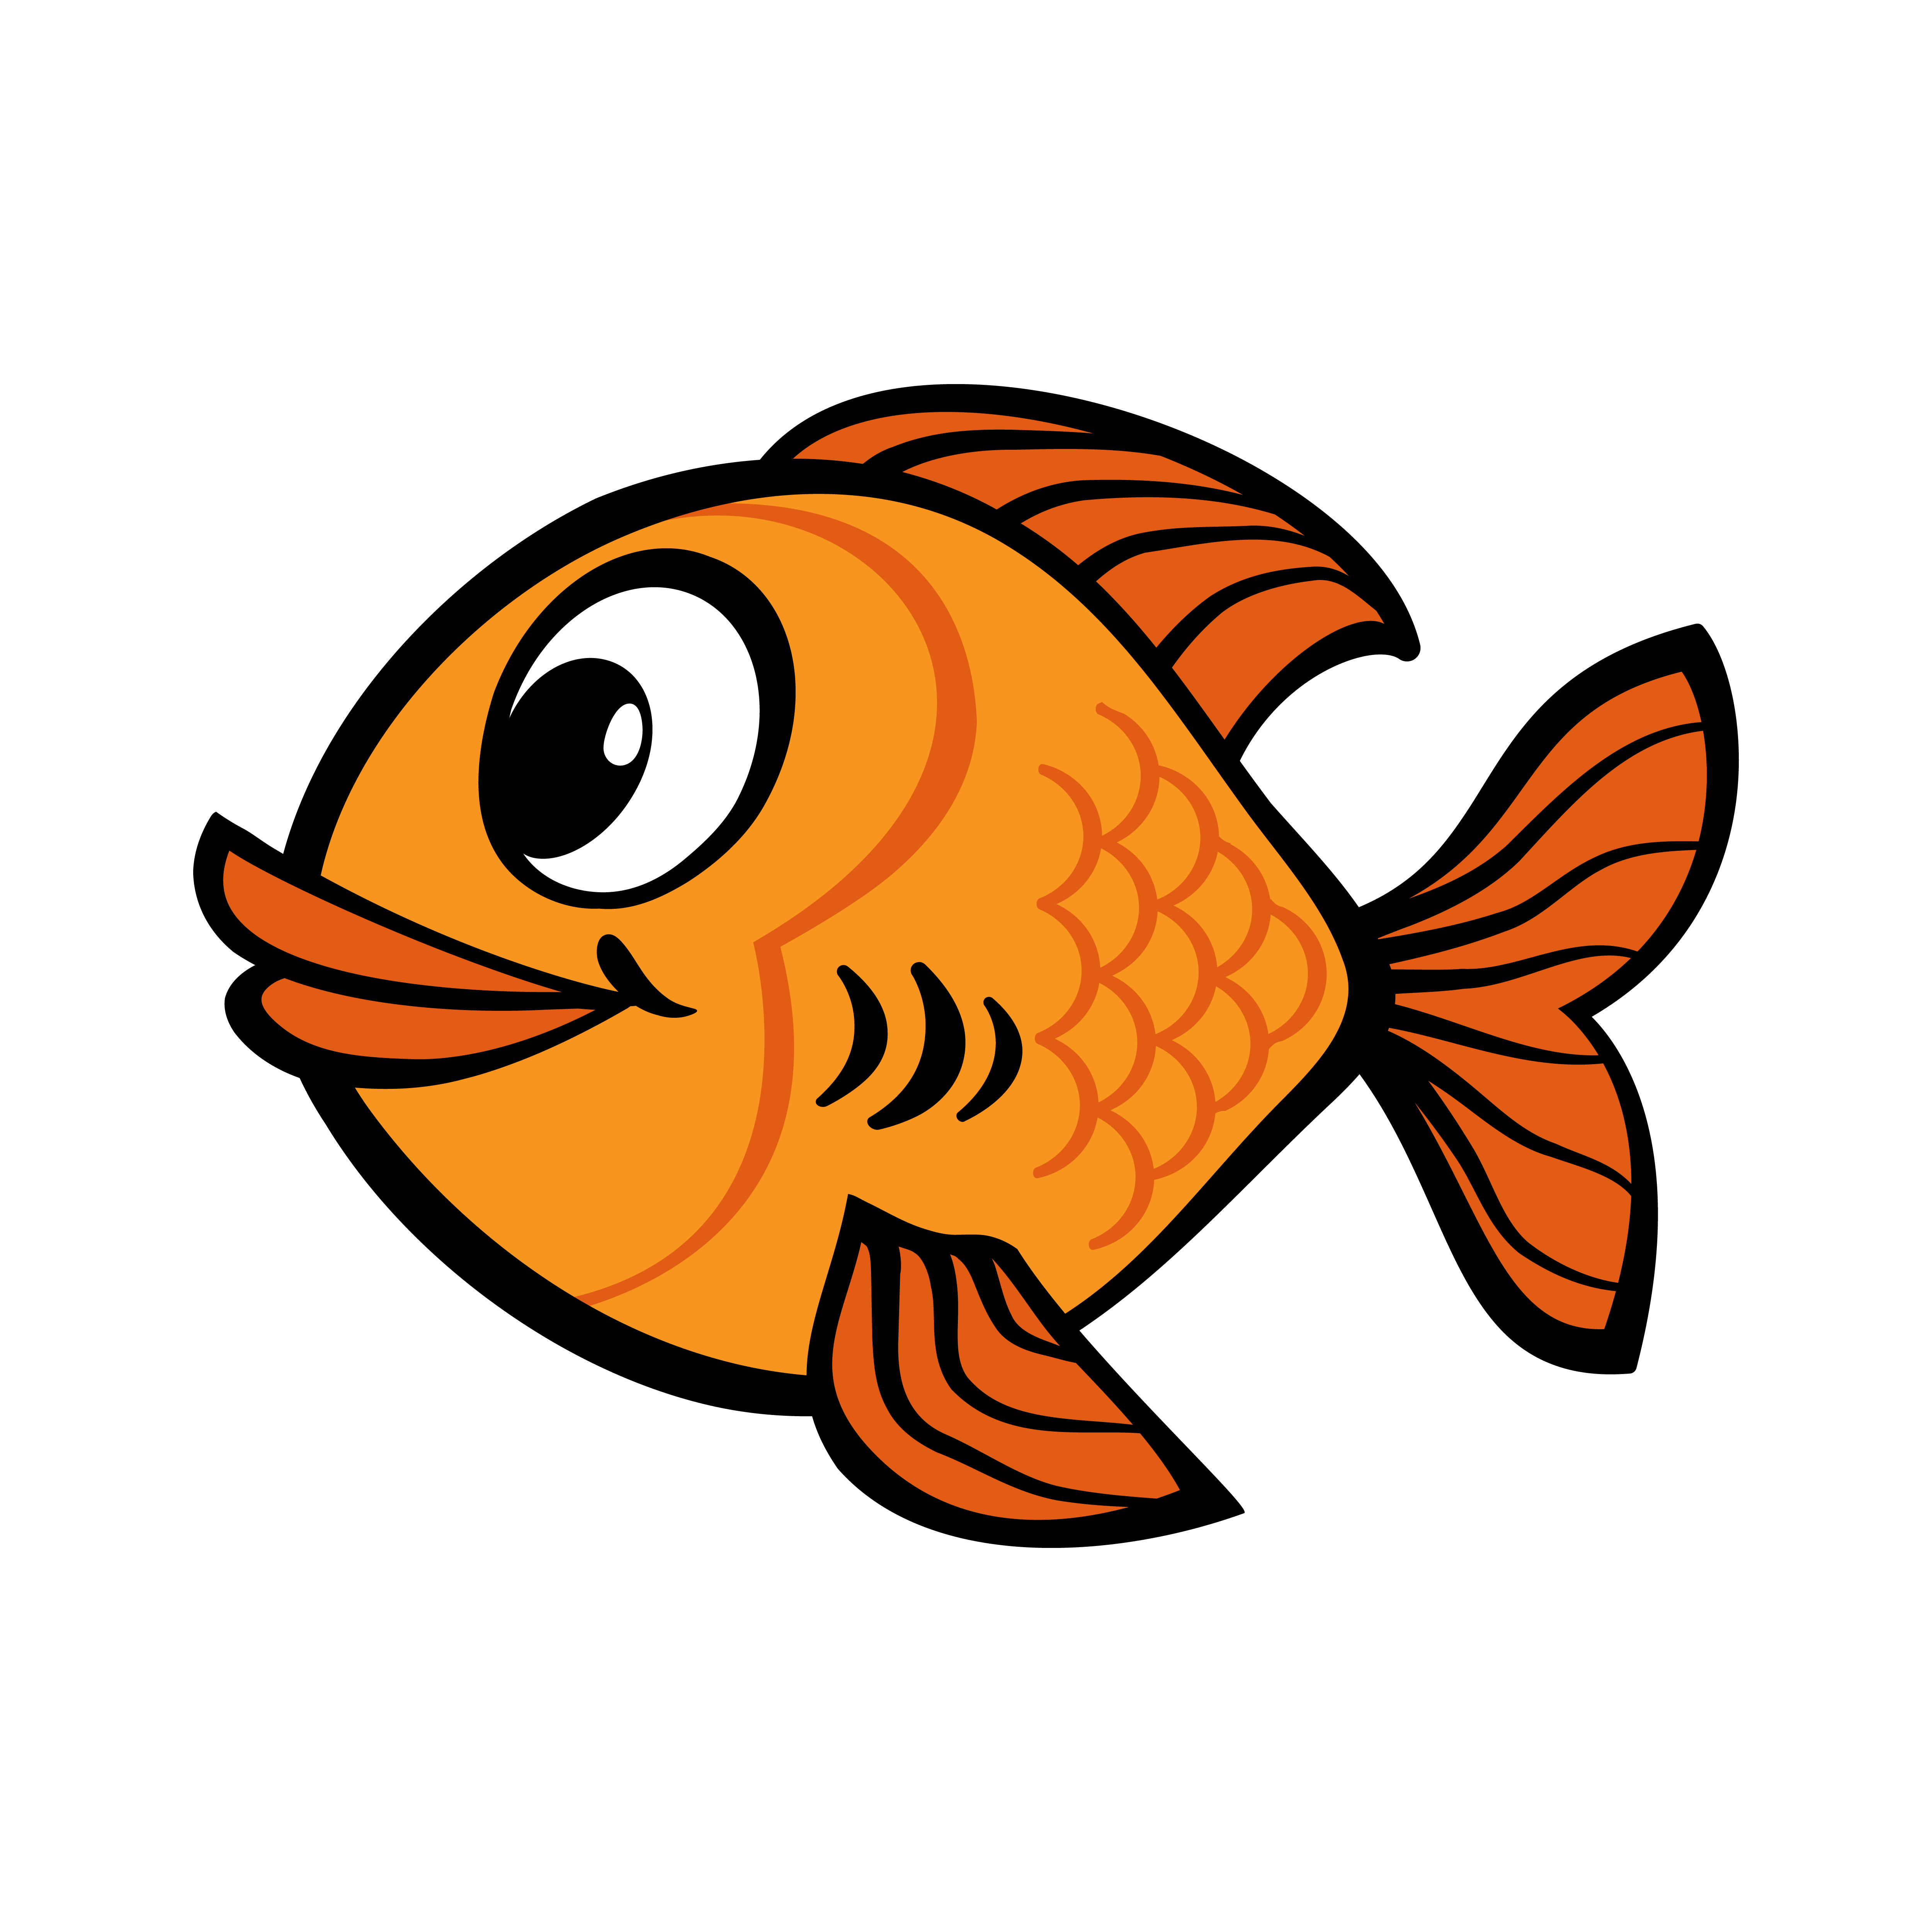 Download Goldfish cartoon vector icon 547710 - Download Free ...